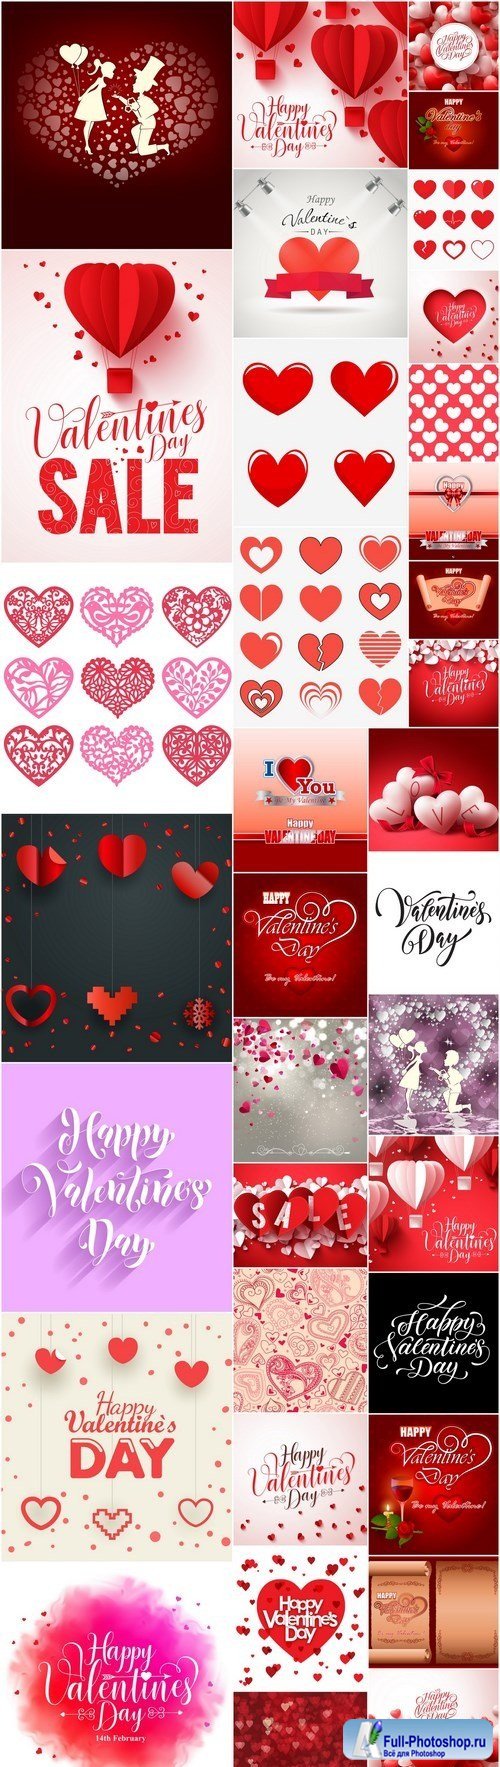 Happy Valentines Day Background #15 - 60 Vector